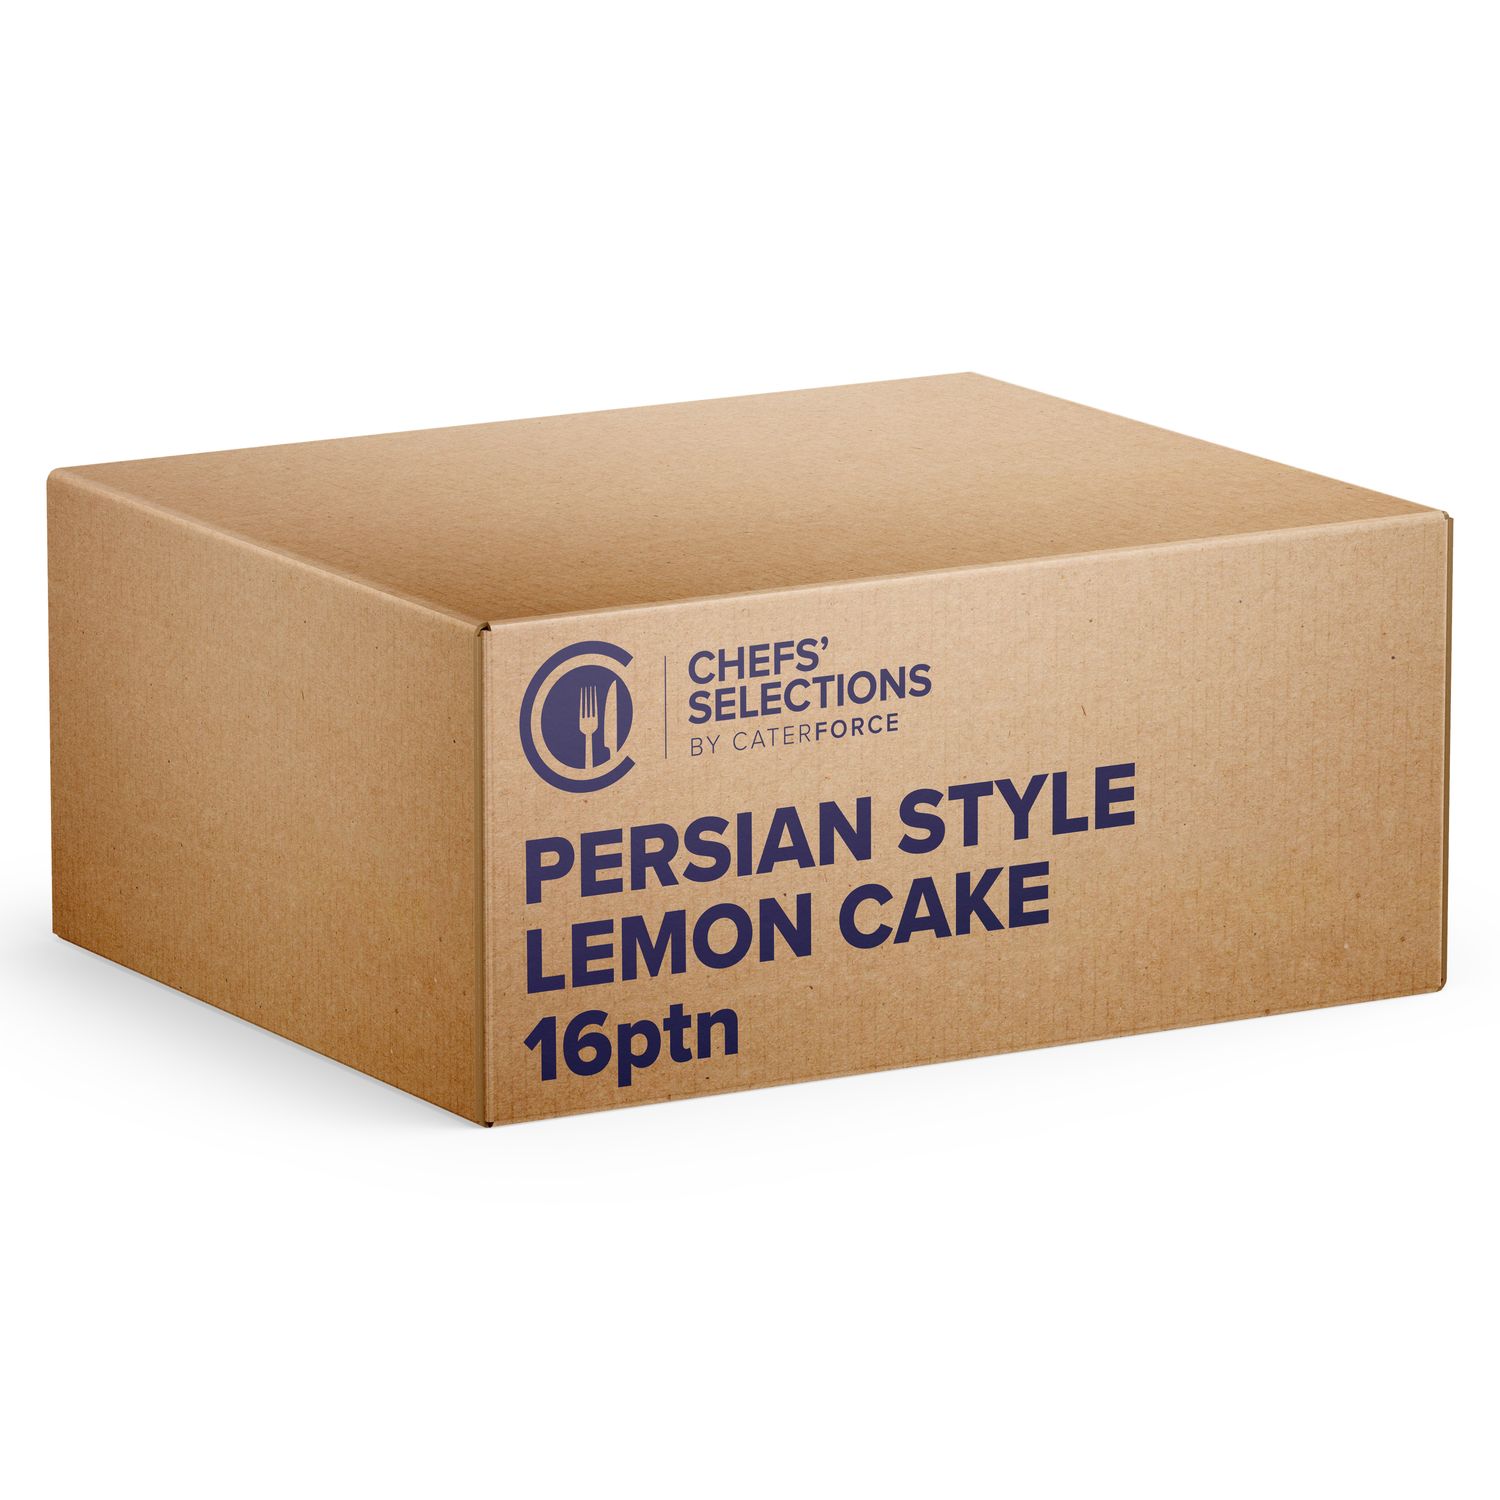 Chefs’ Selections Persian Style Lemon Cake (1 x 16p/ptn)